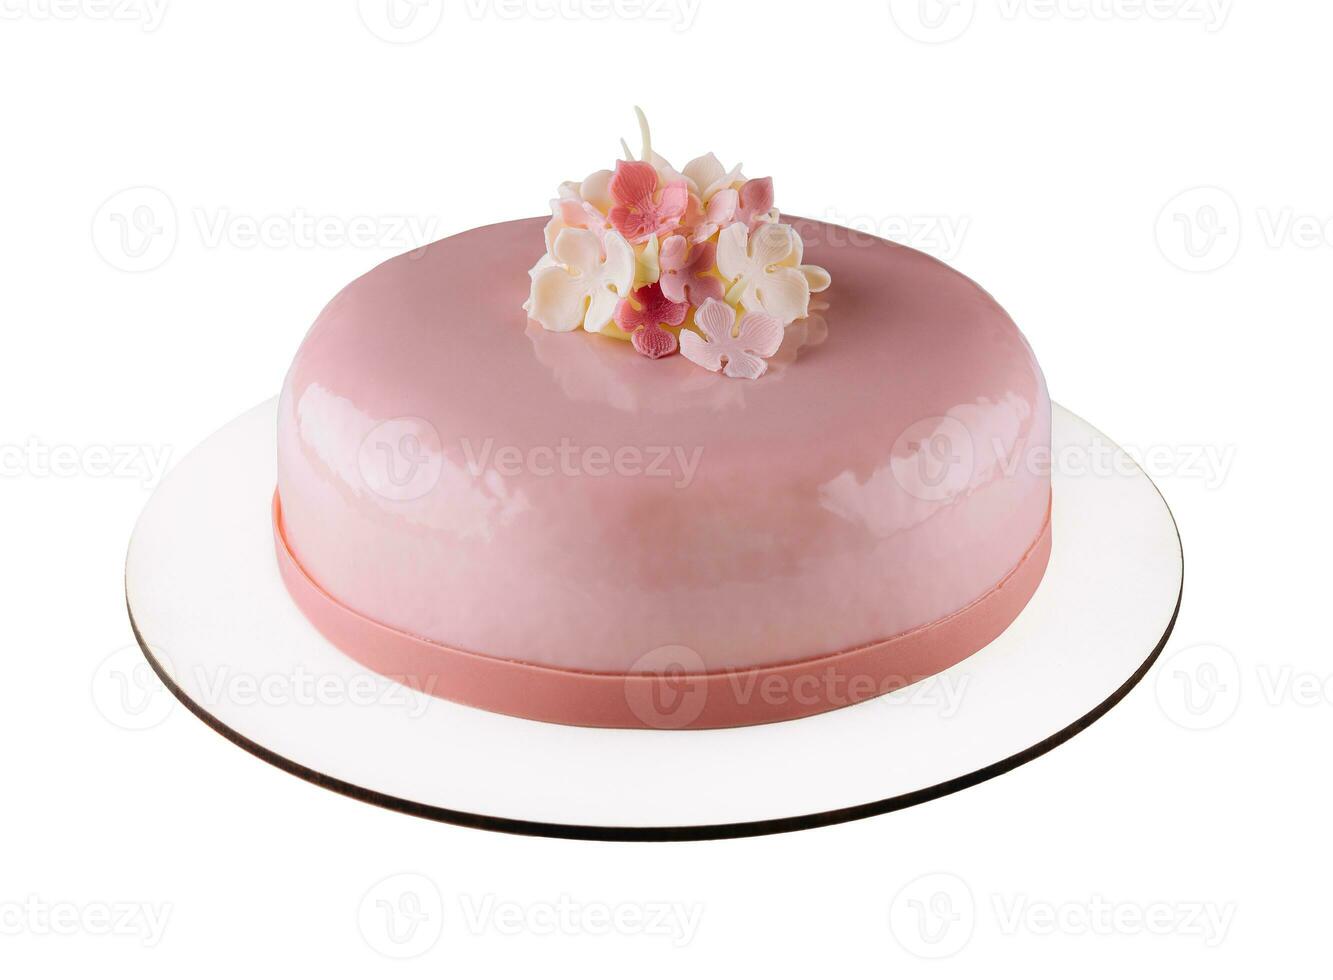 rosa mousse kakor dekorerad på vit tallrik foto